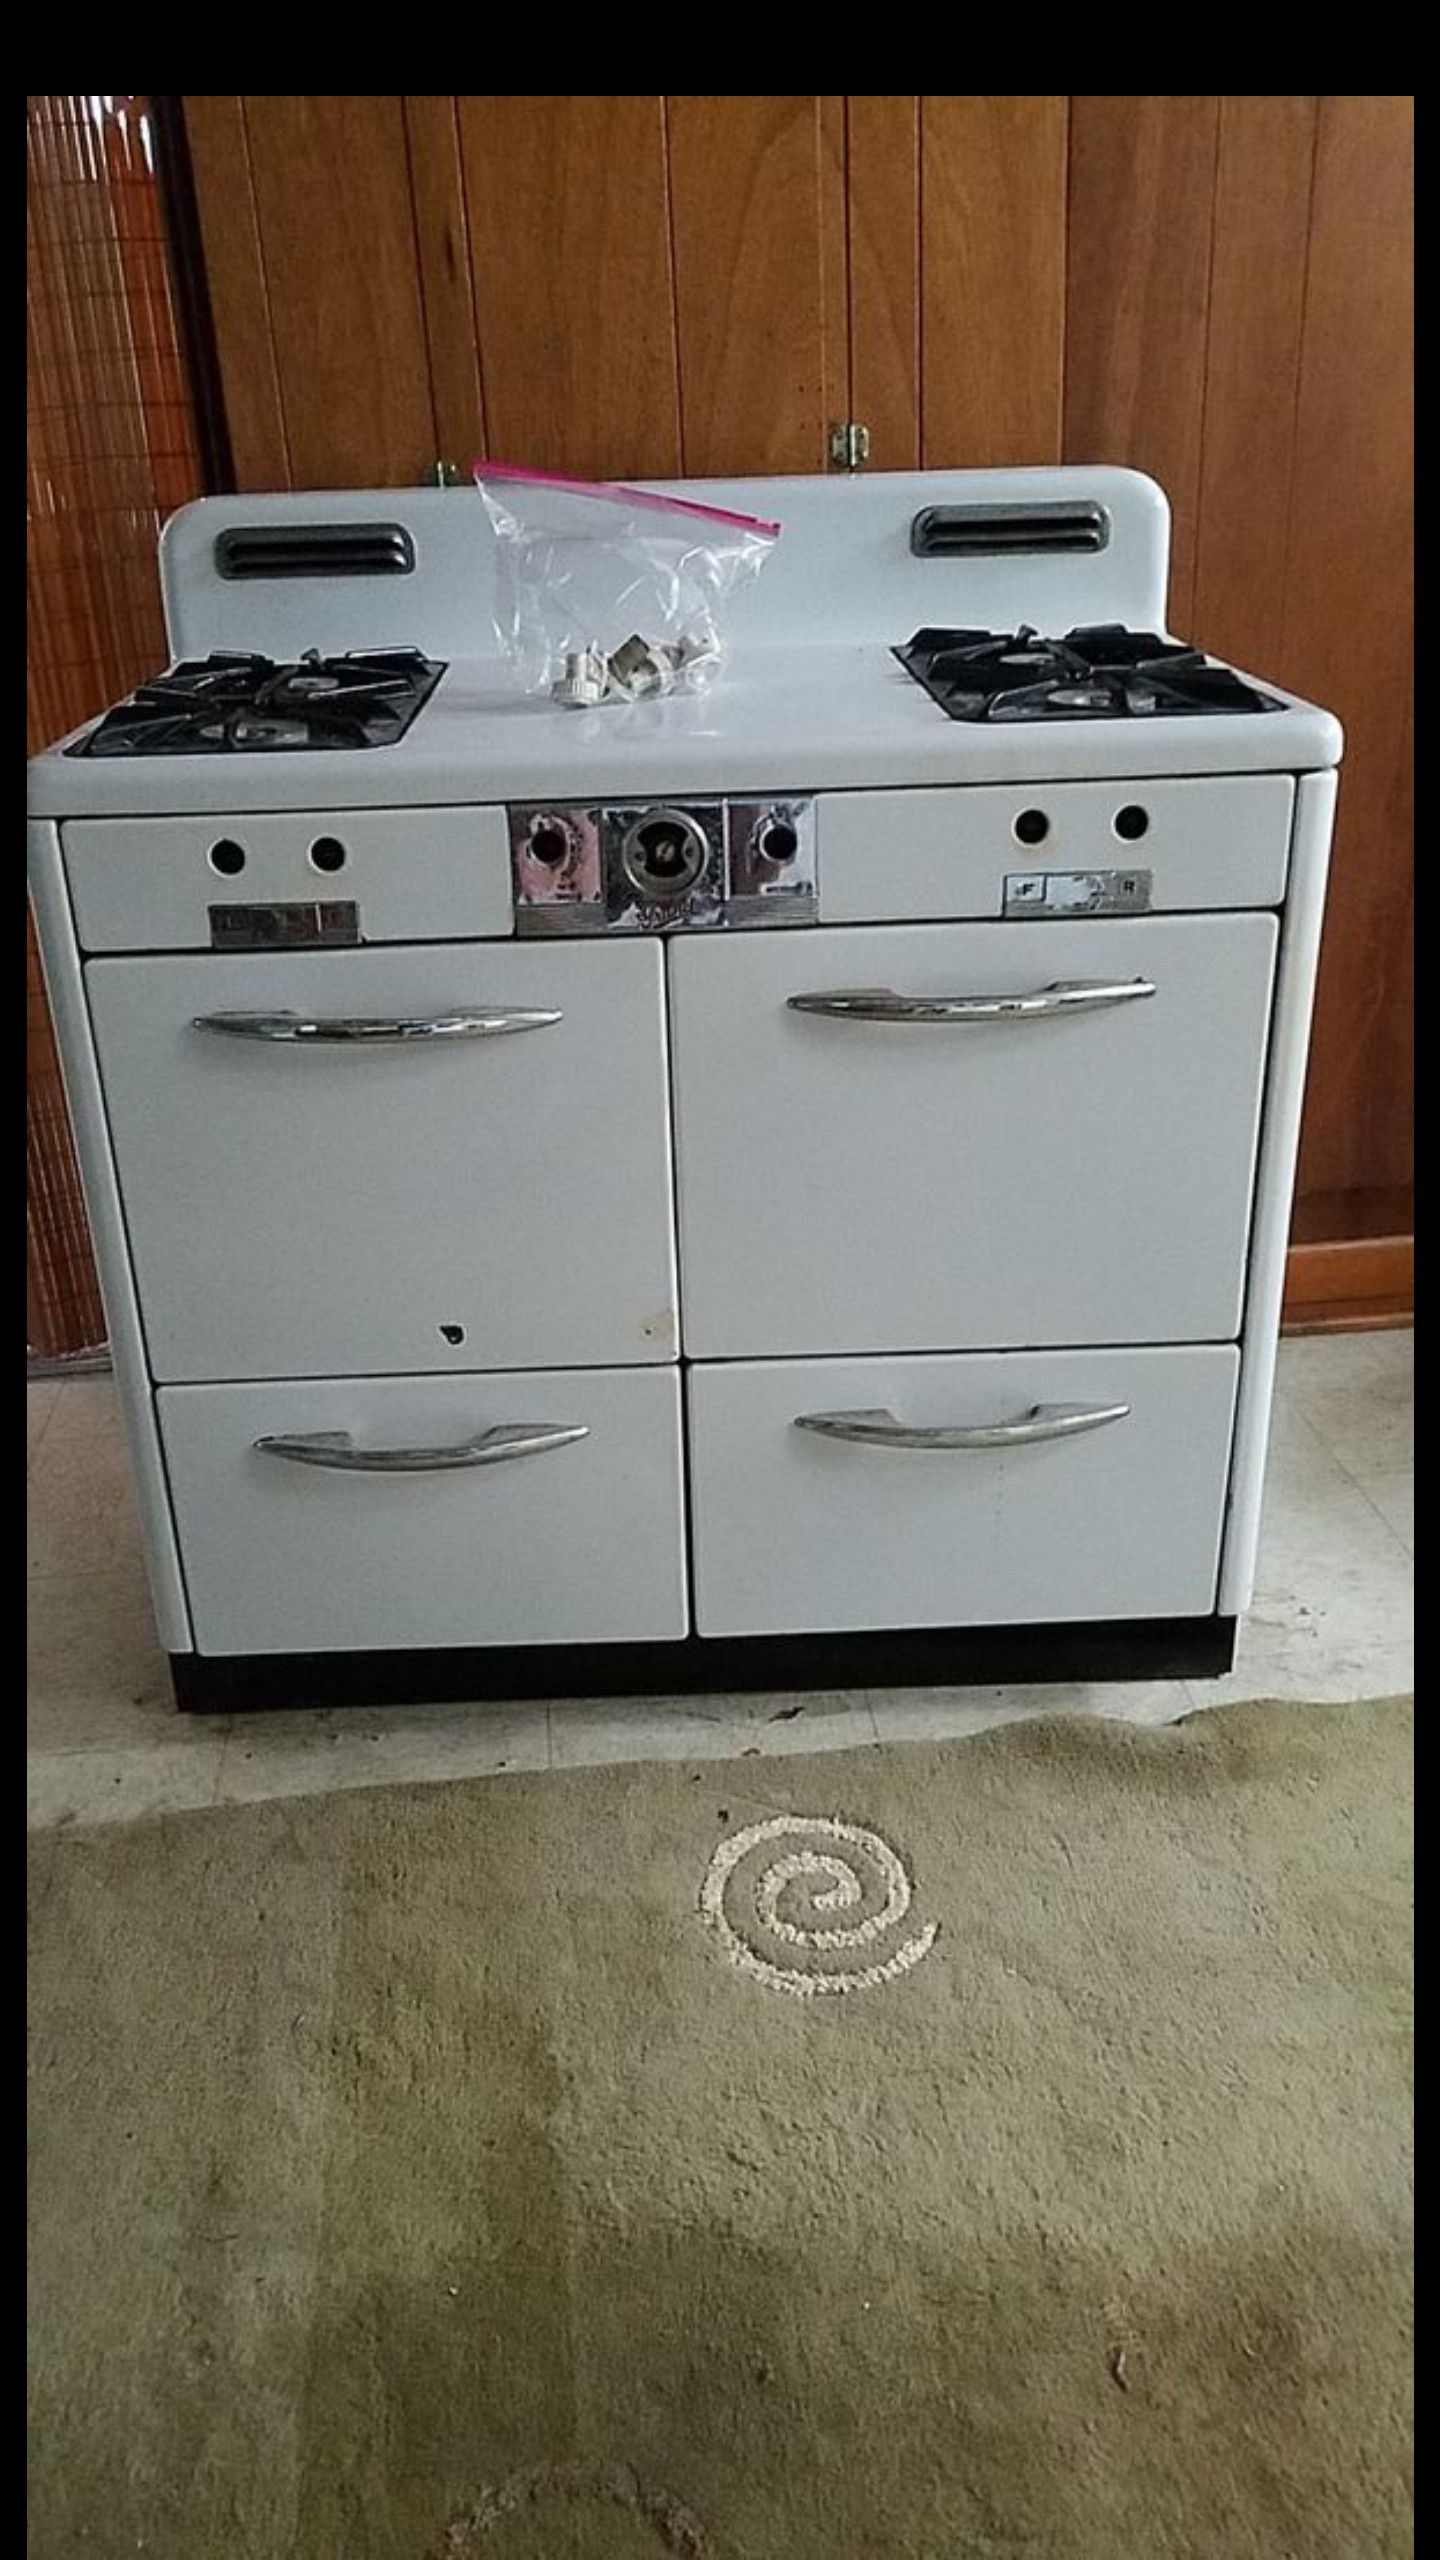 Grand brand vintage stove